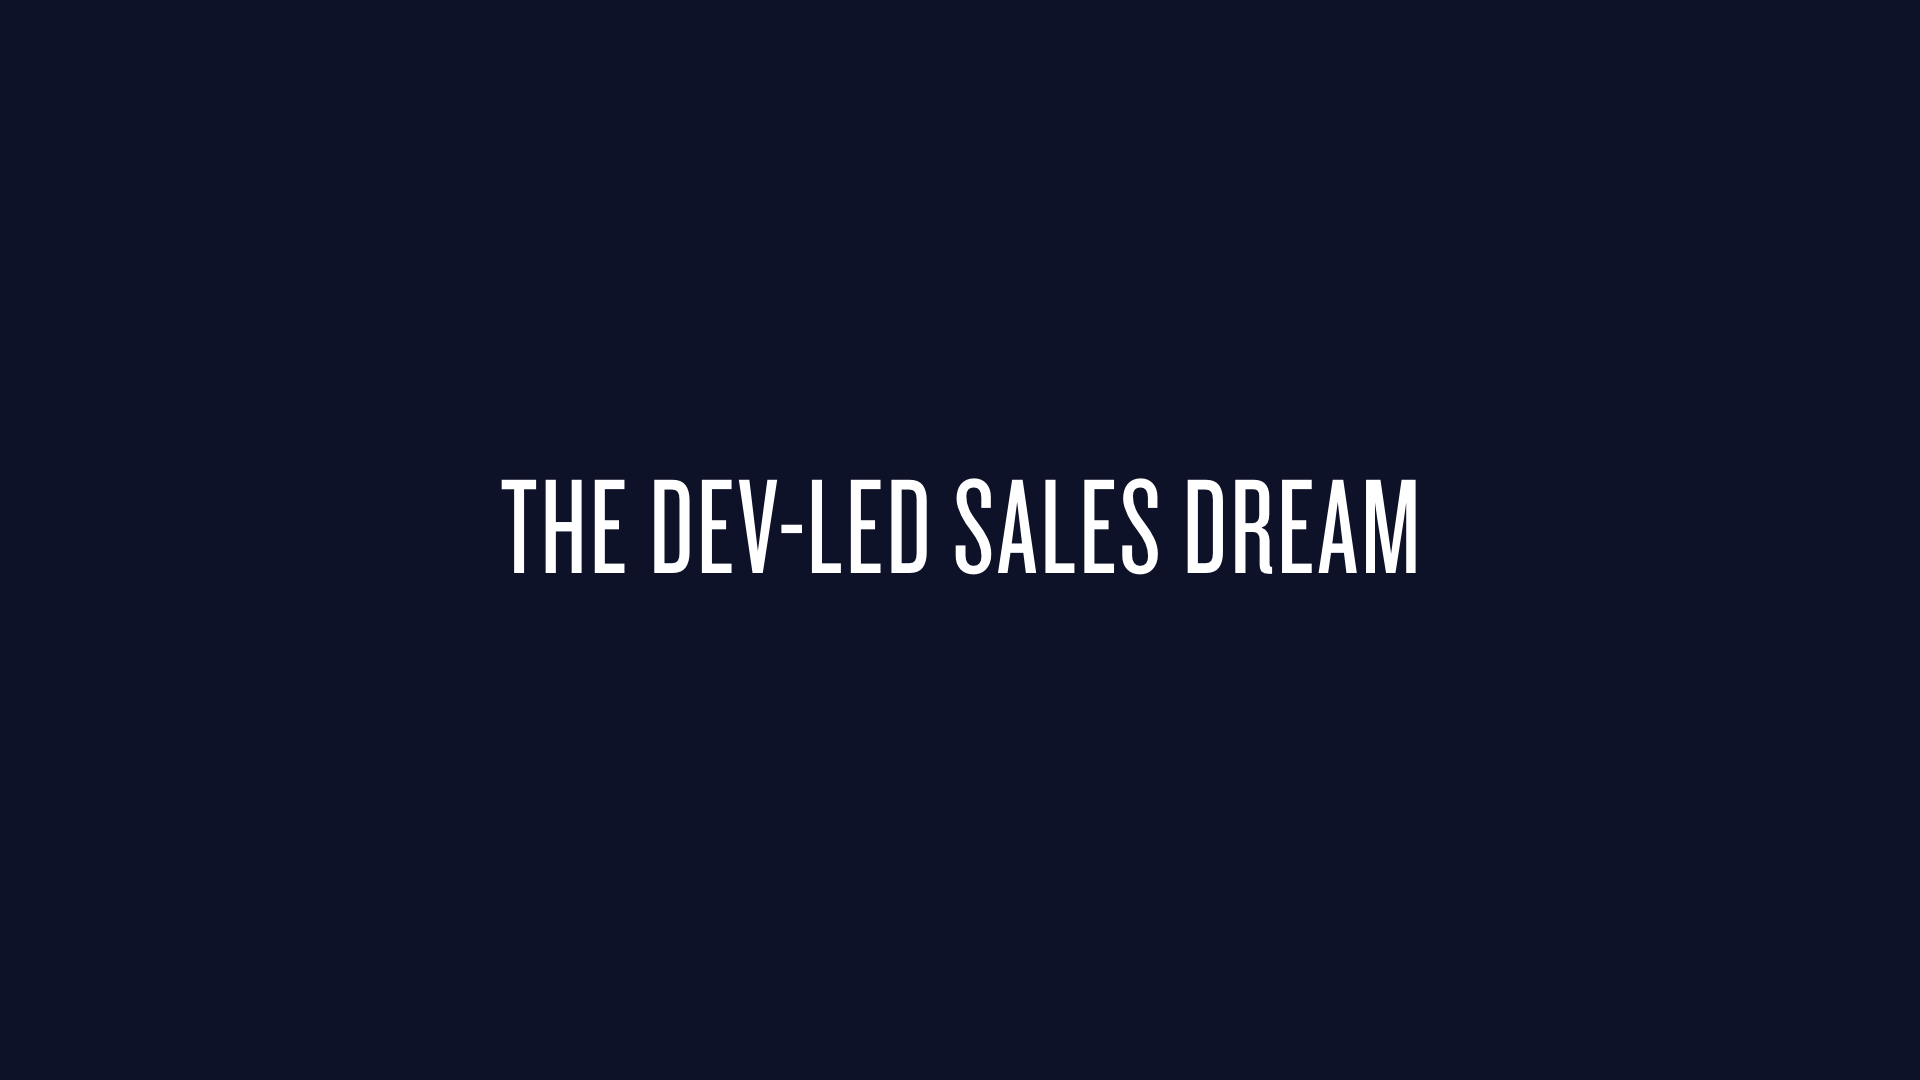 Section title slide for the dream of developer-led sales.